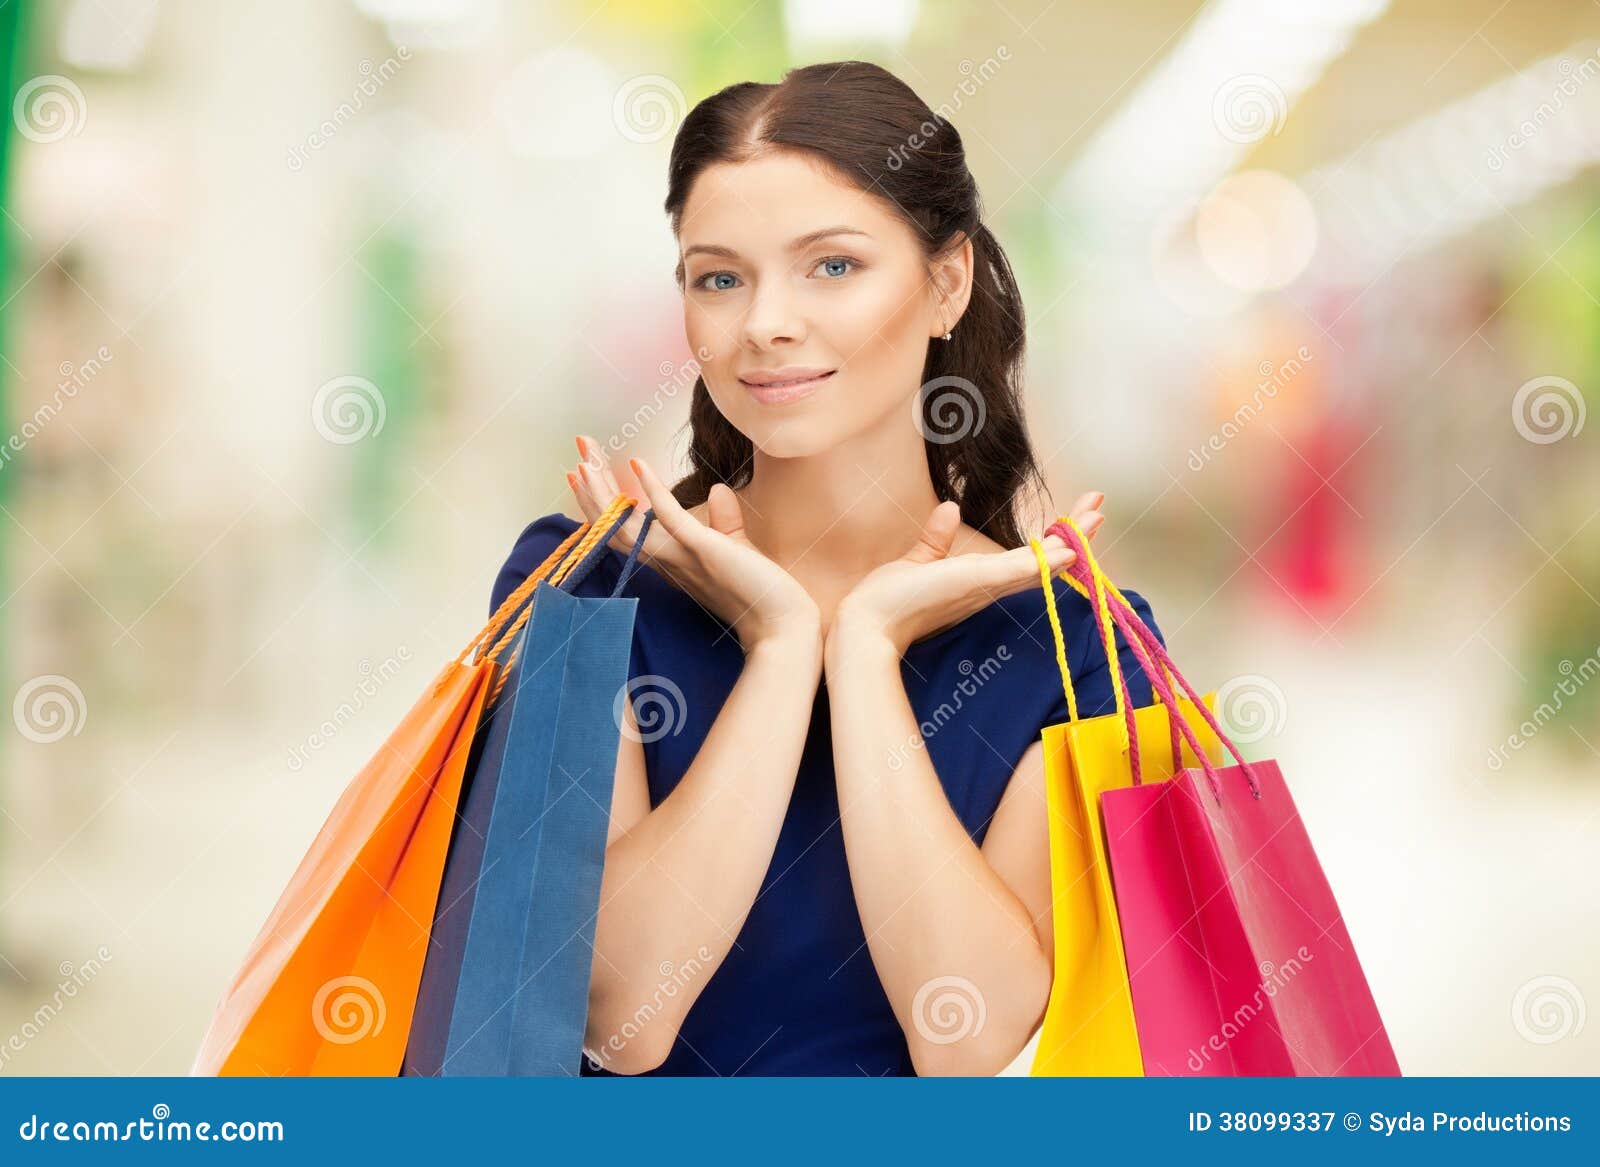 Shopper stock image. Image of lady, caucasian, consumer - 38099337